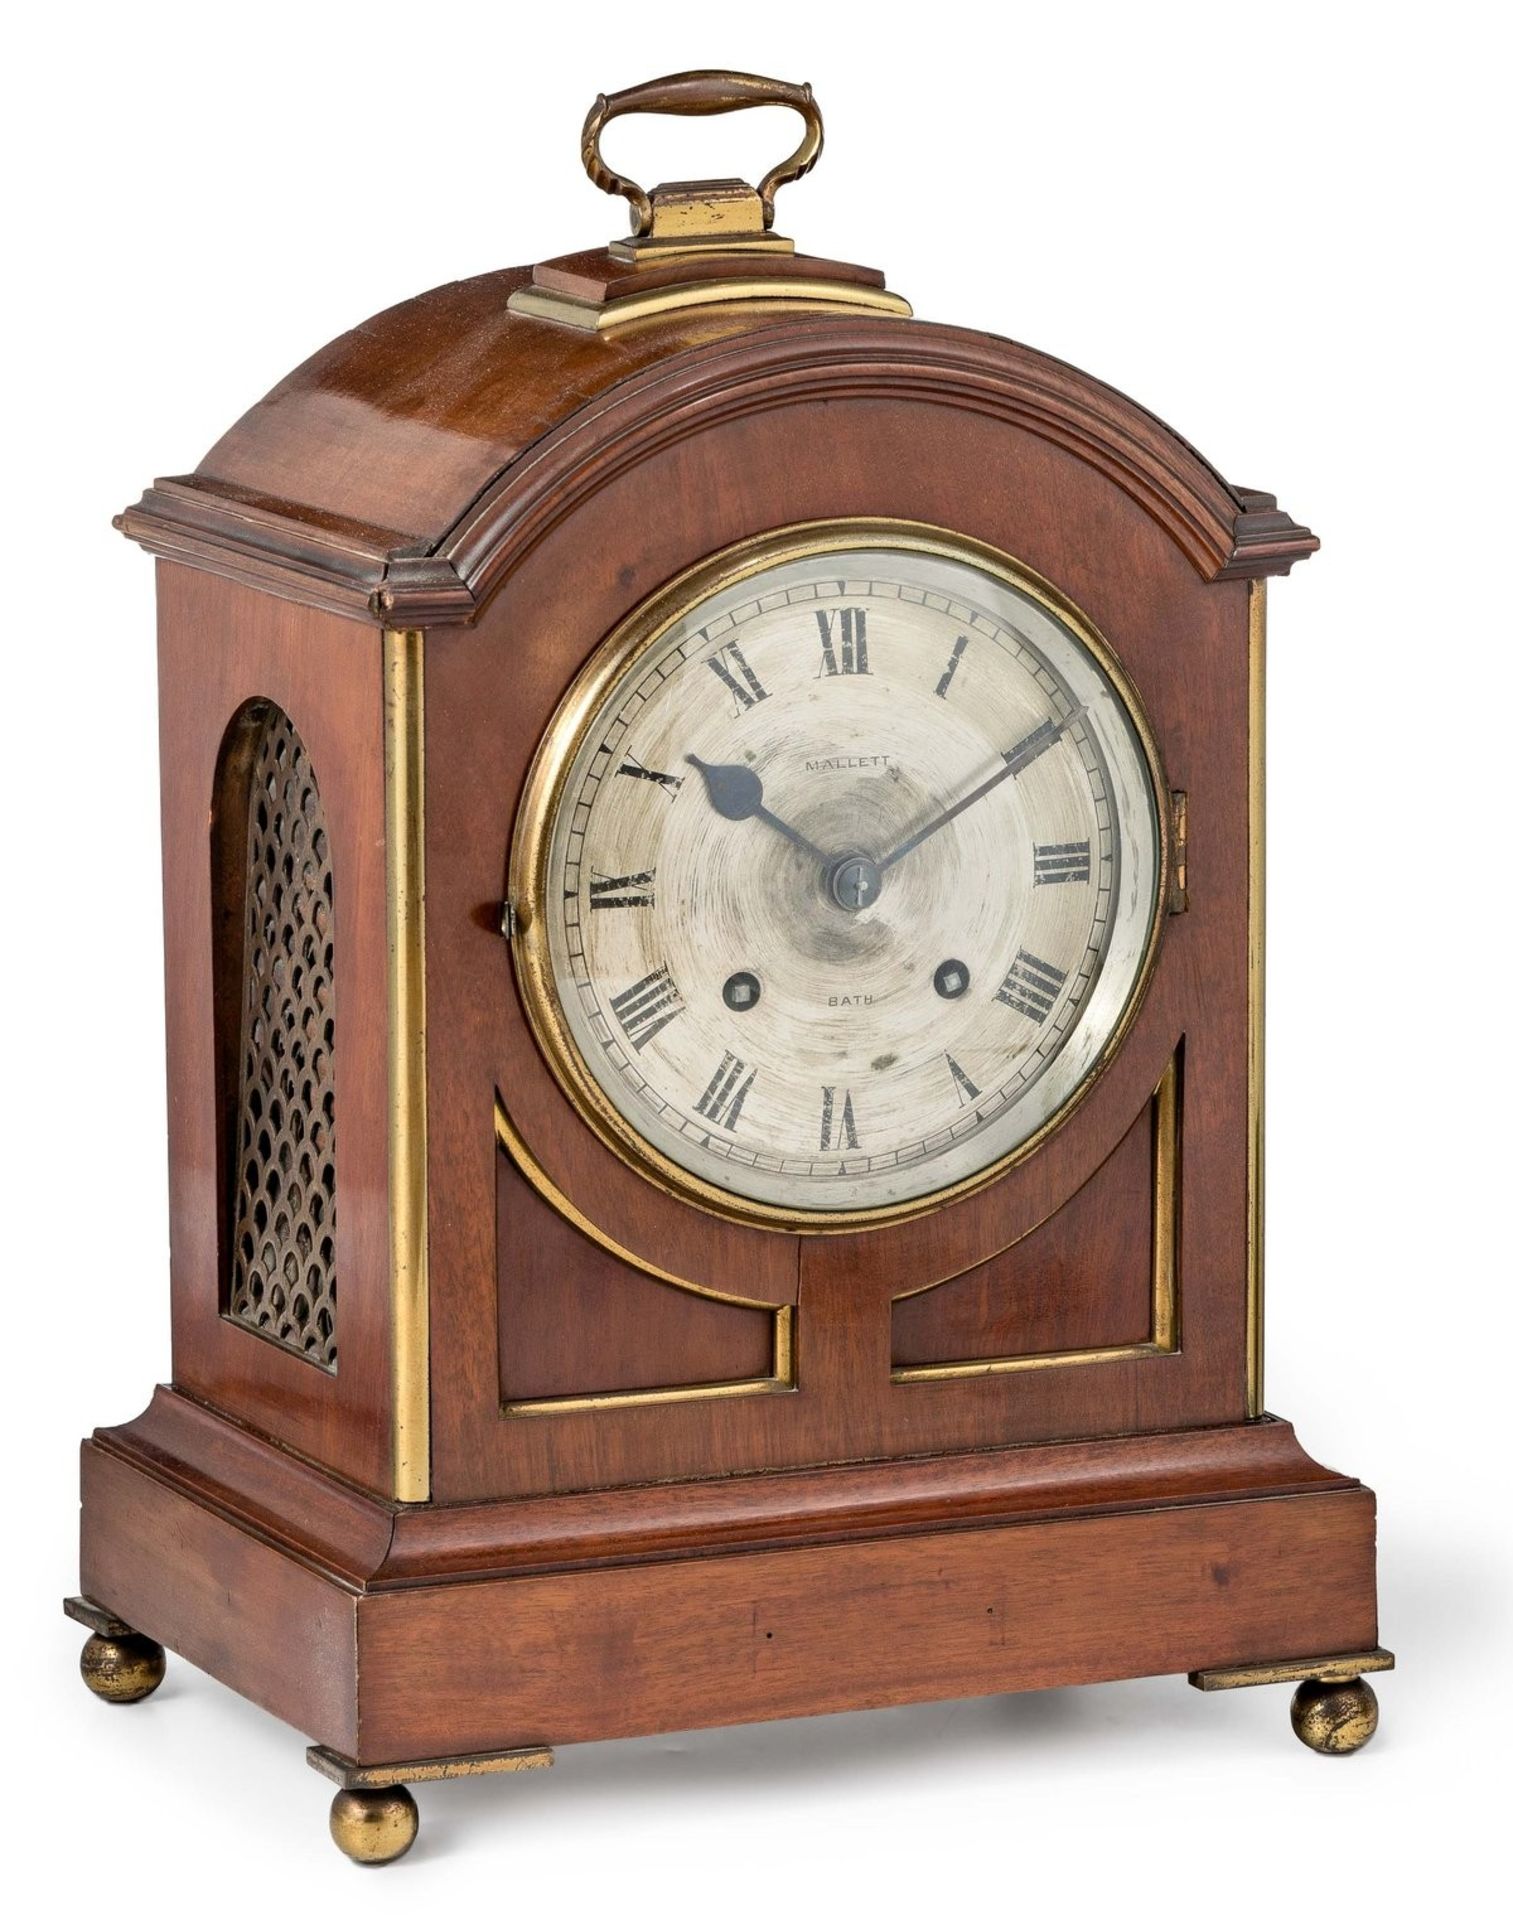 Bracket Clock "Mallet Bath" England, um 1900